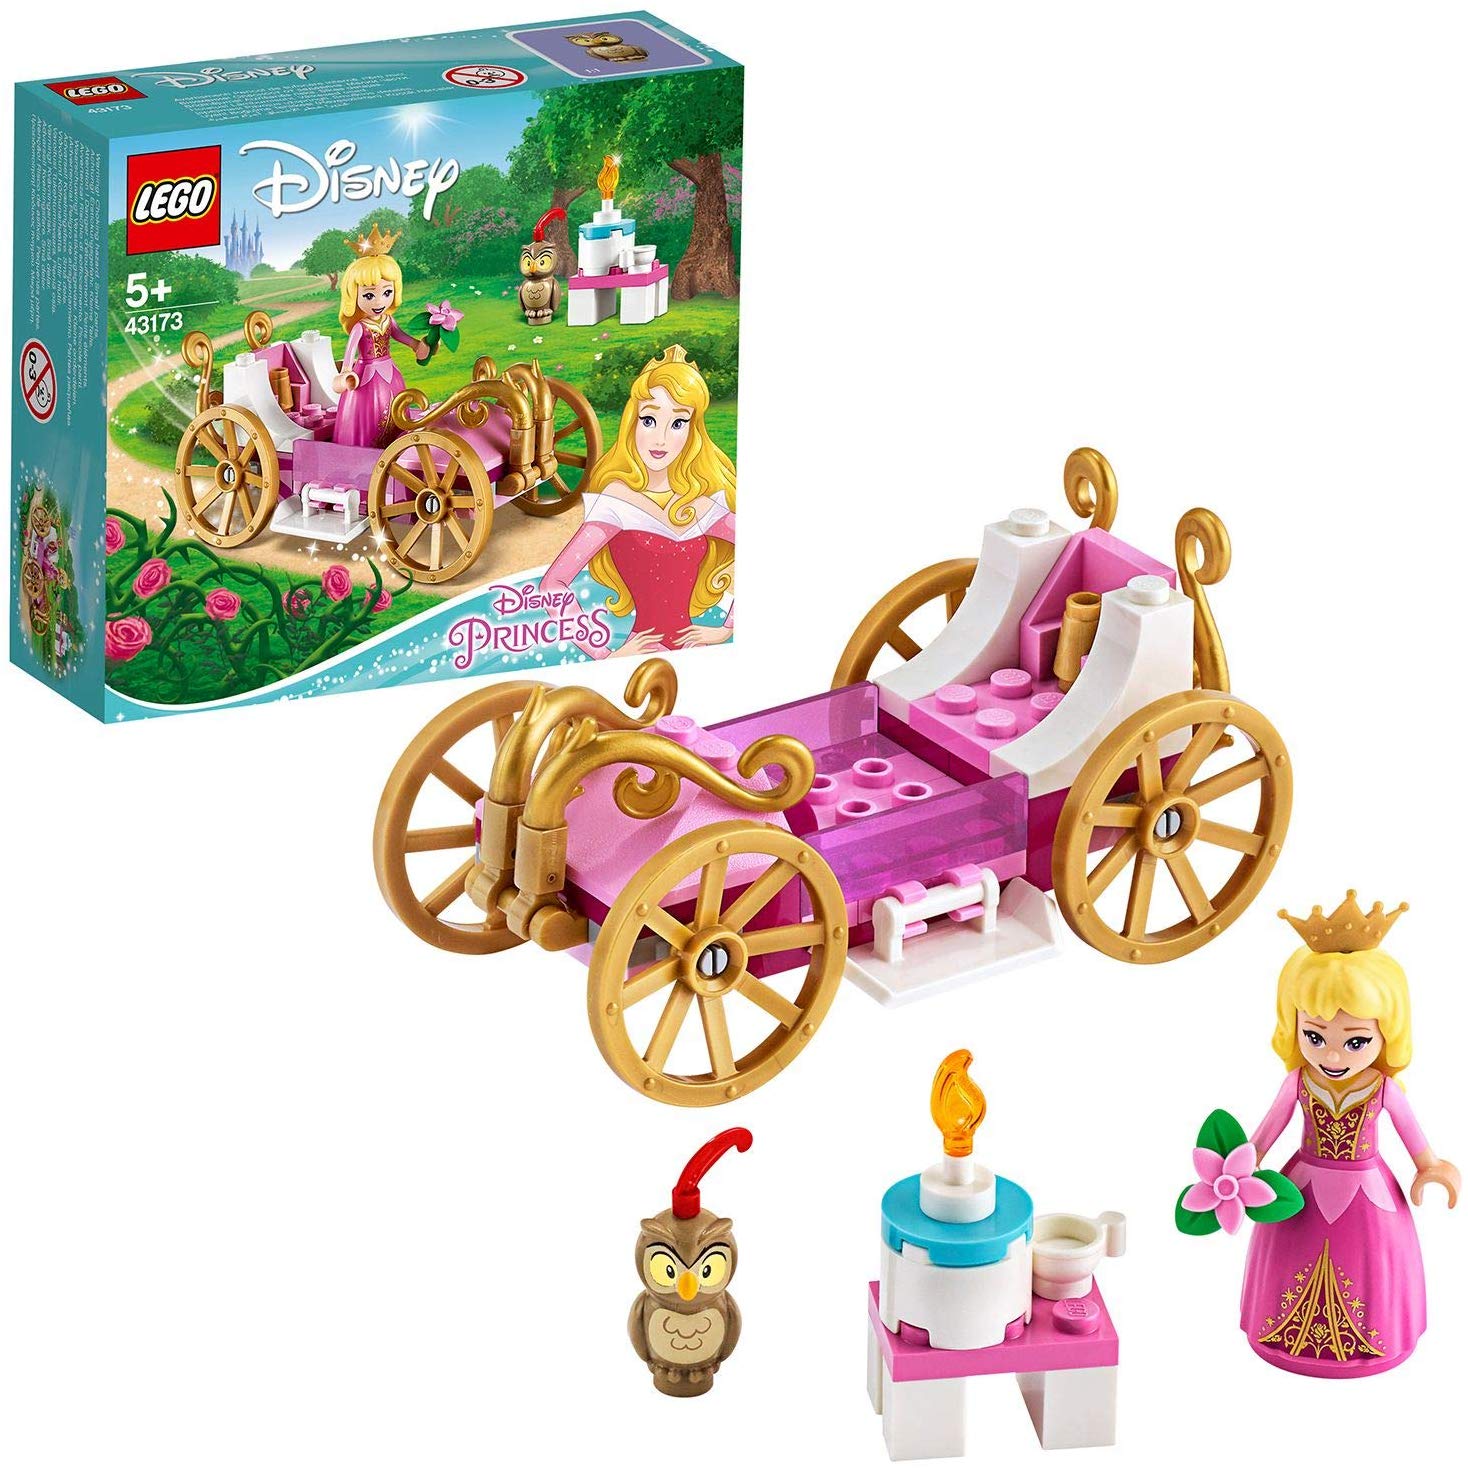 LEGO 43173 - Aurora's Royal Carriage, Disney Princess Construction Set